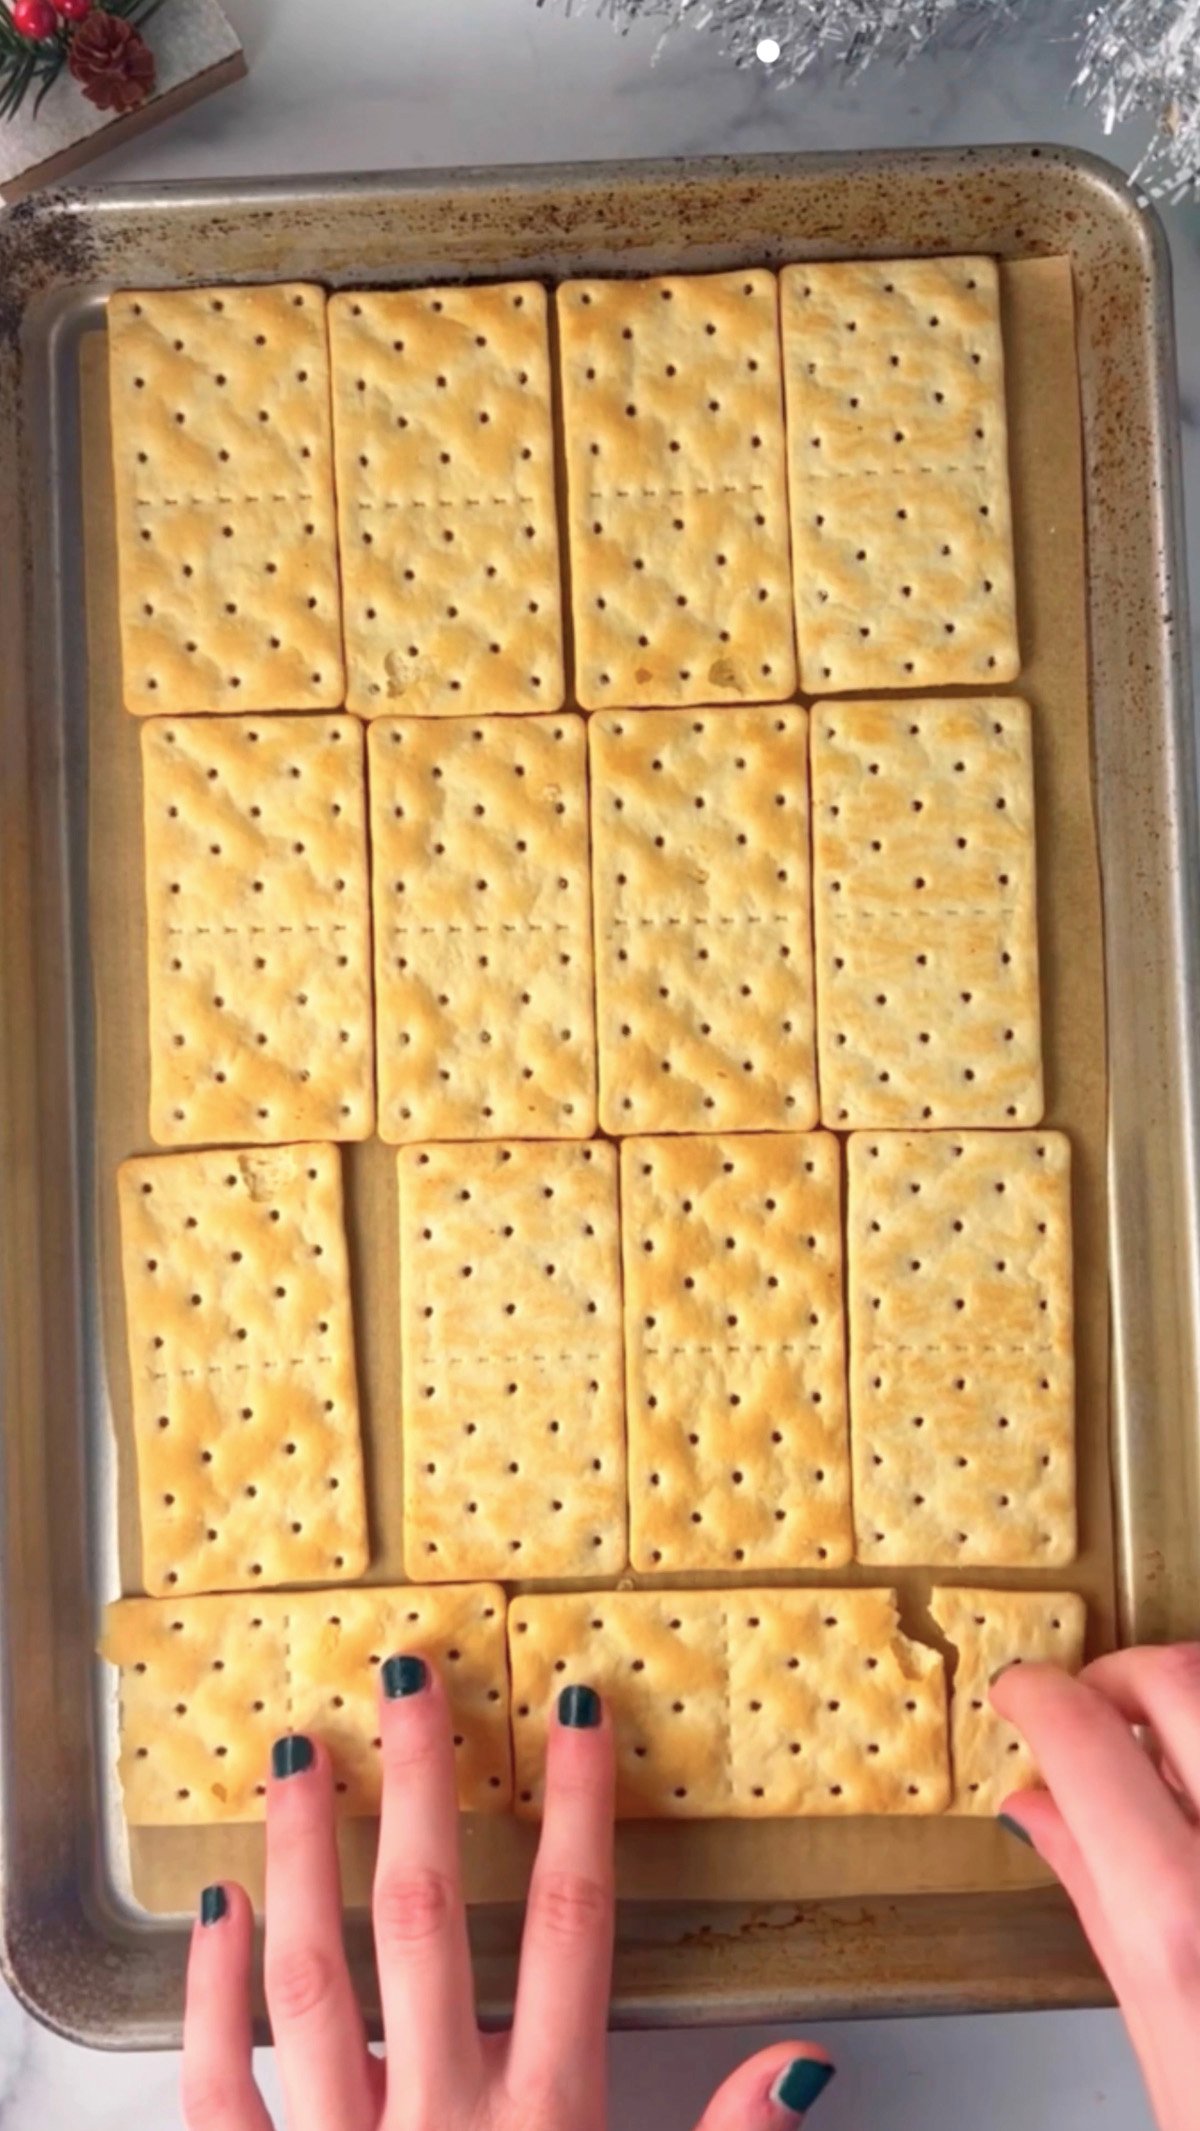 Gluten free crackers on a sheet pan.